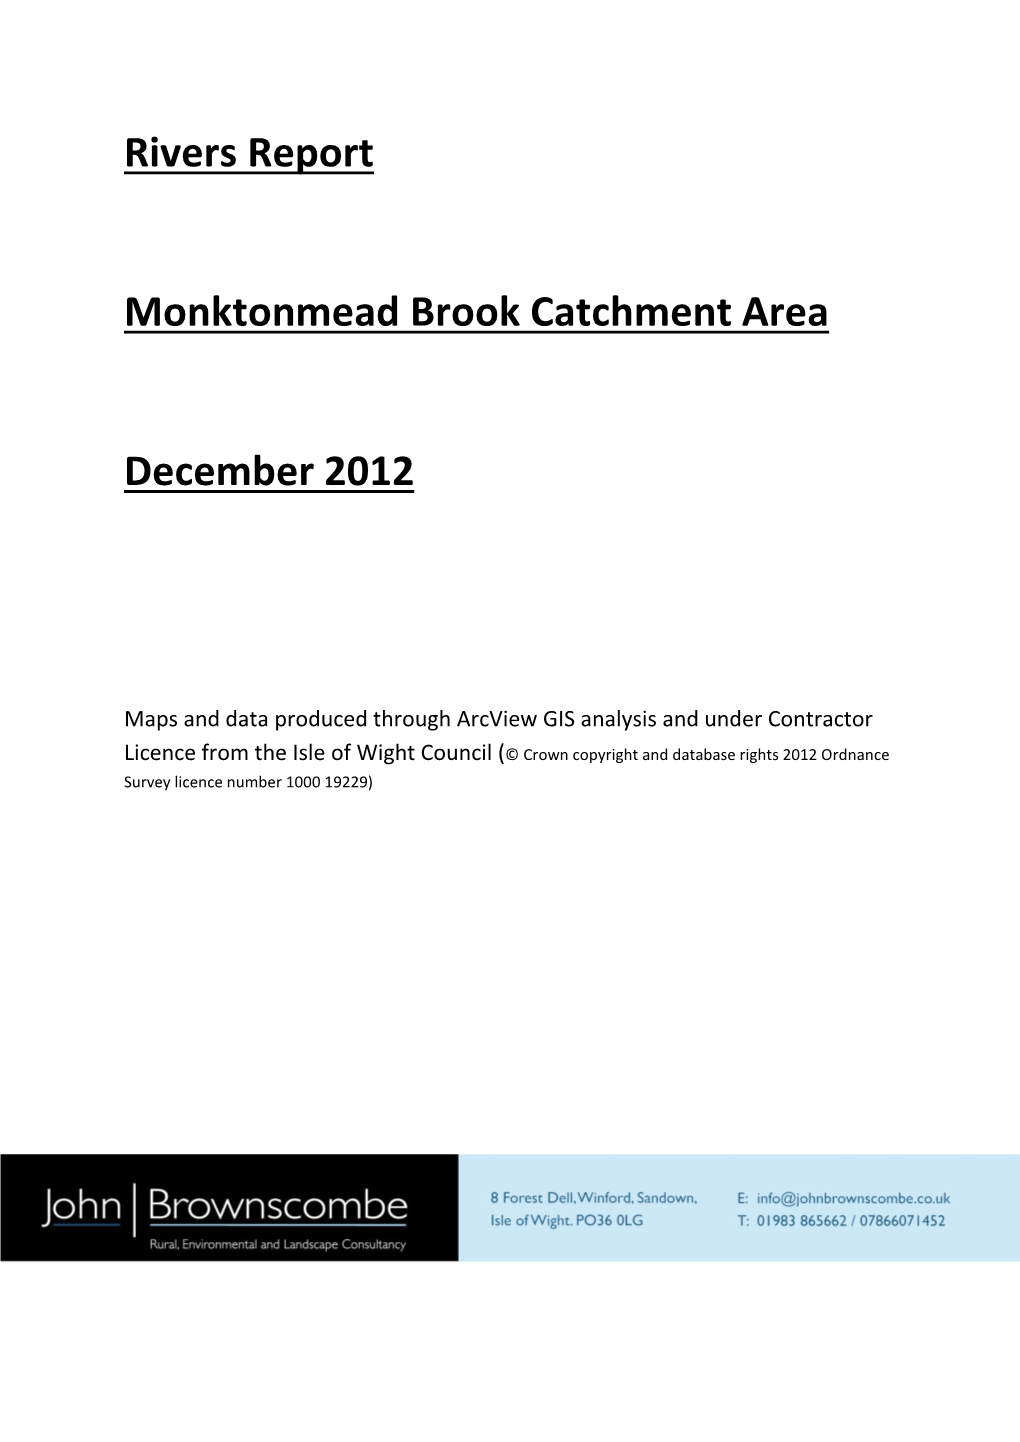 Monktonmead Final Report